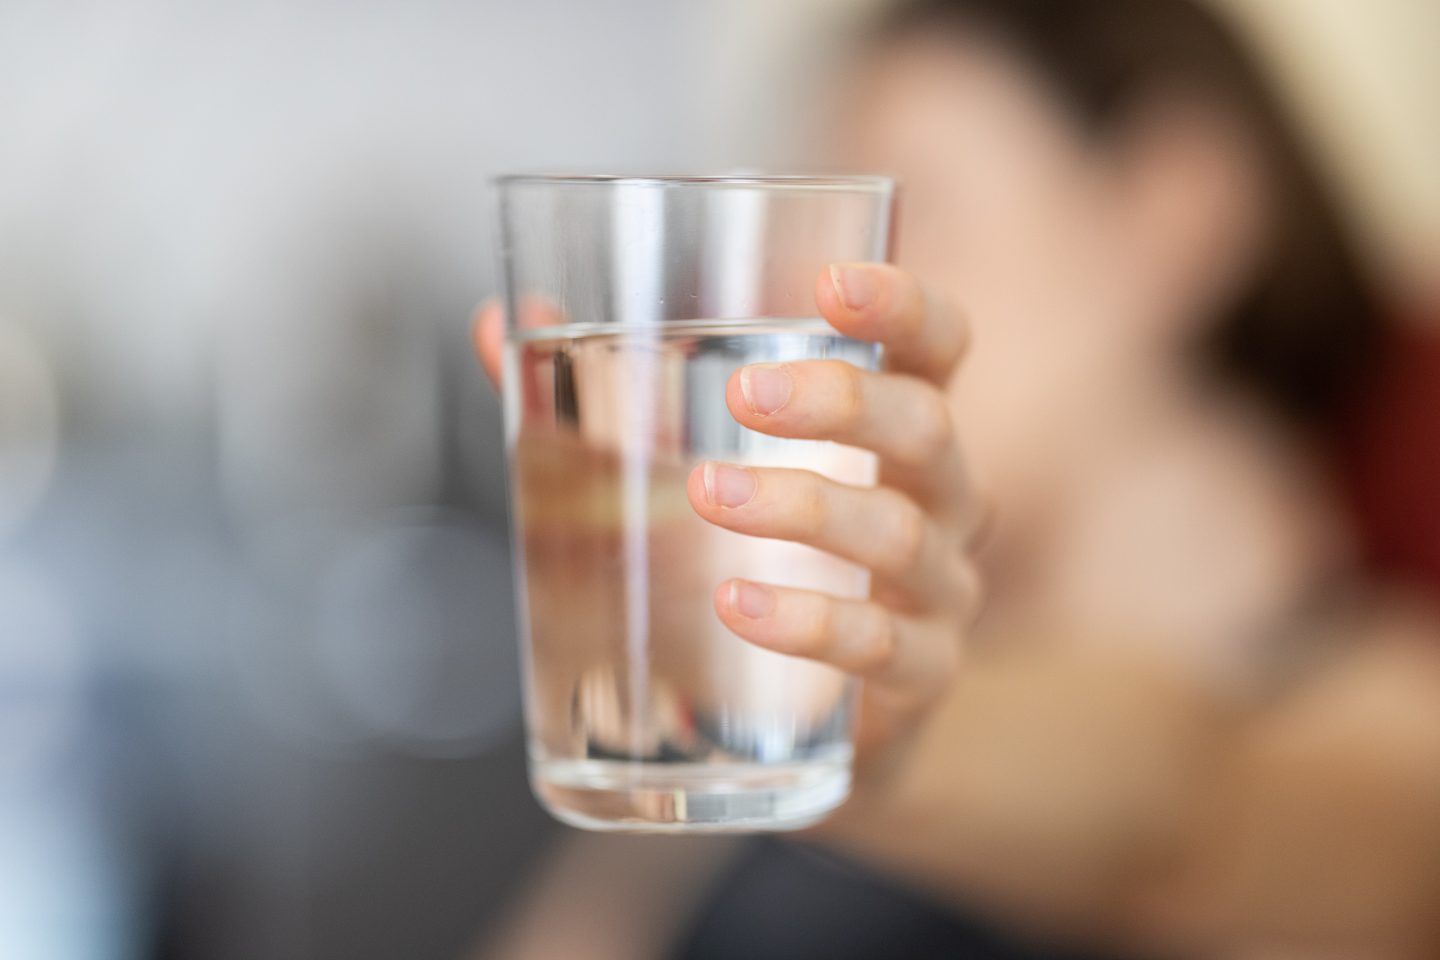 EPA sets targets for slashing PFAS in drinking water